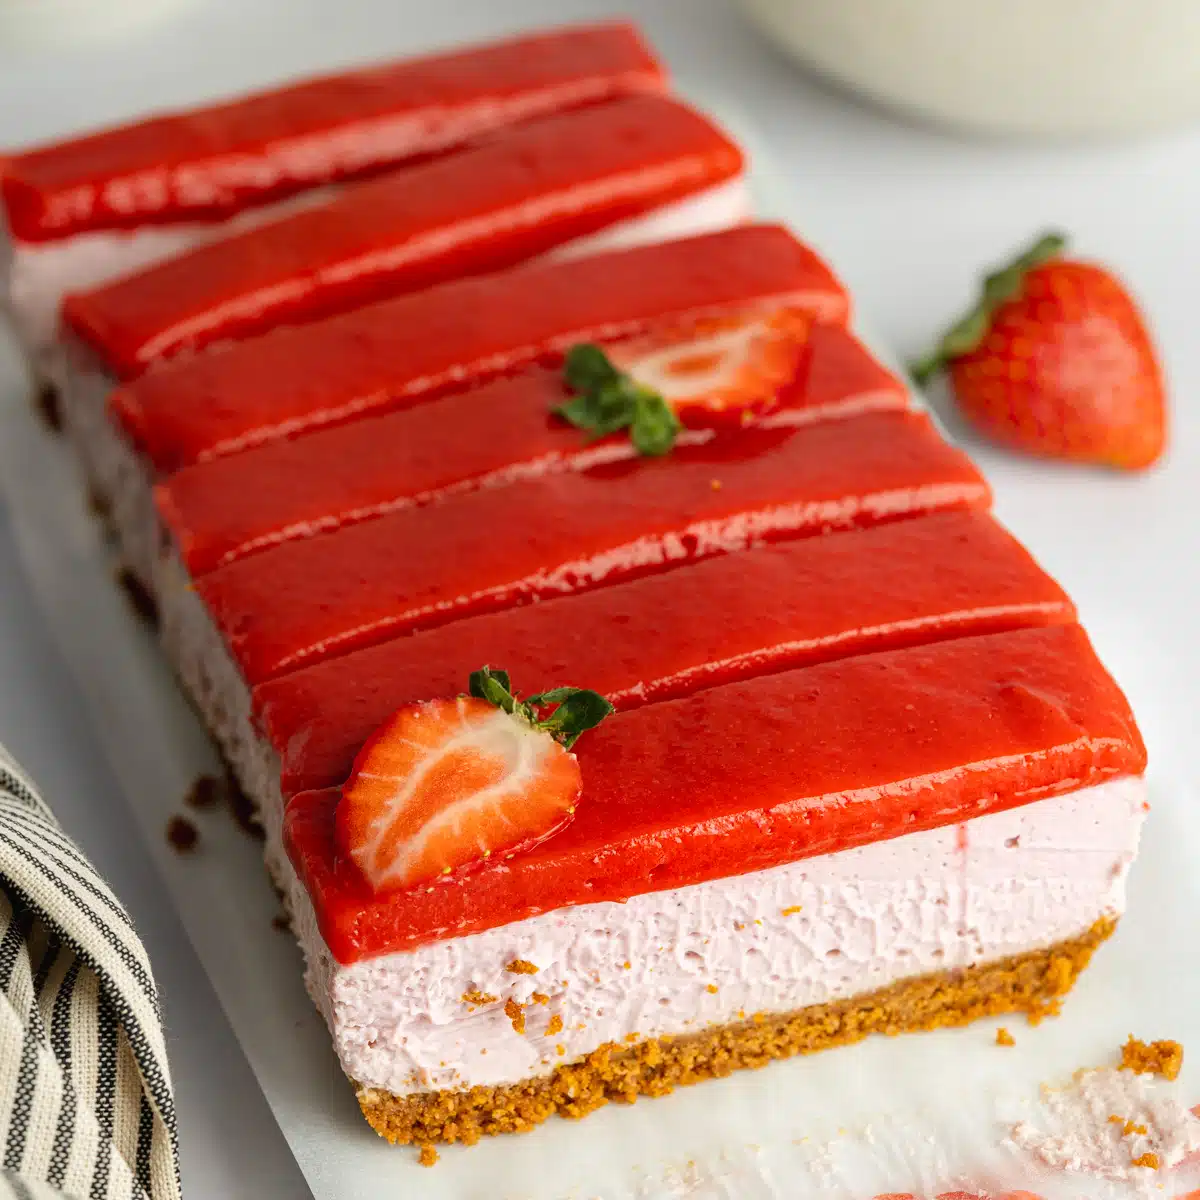 Easy Vegan Strawberry Cheesecake